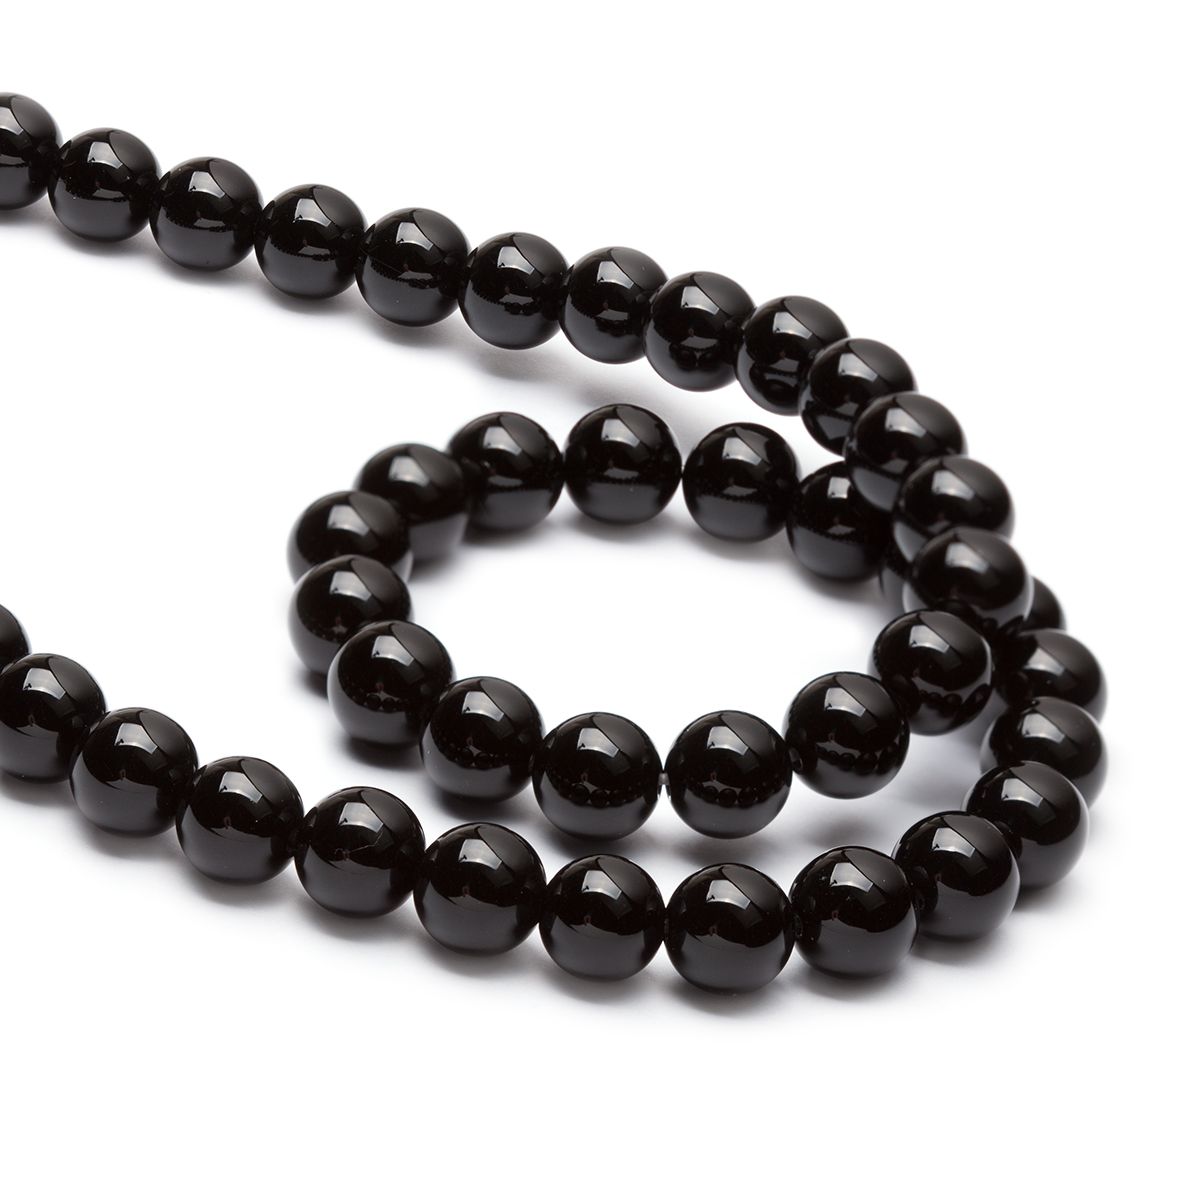 Black Onyx Round Beads